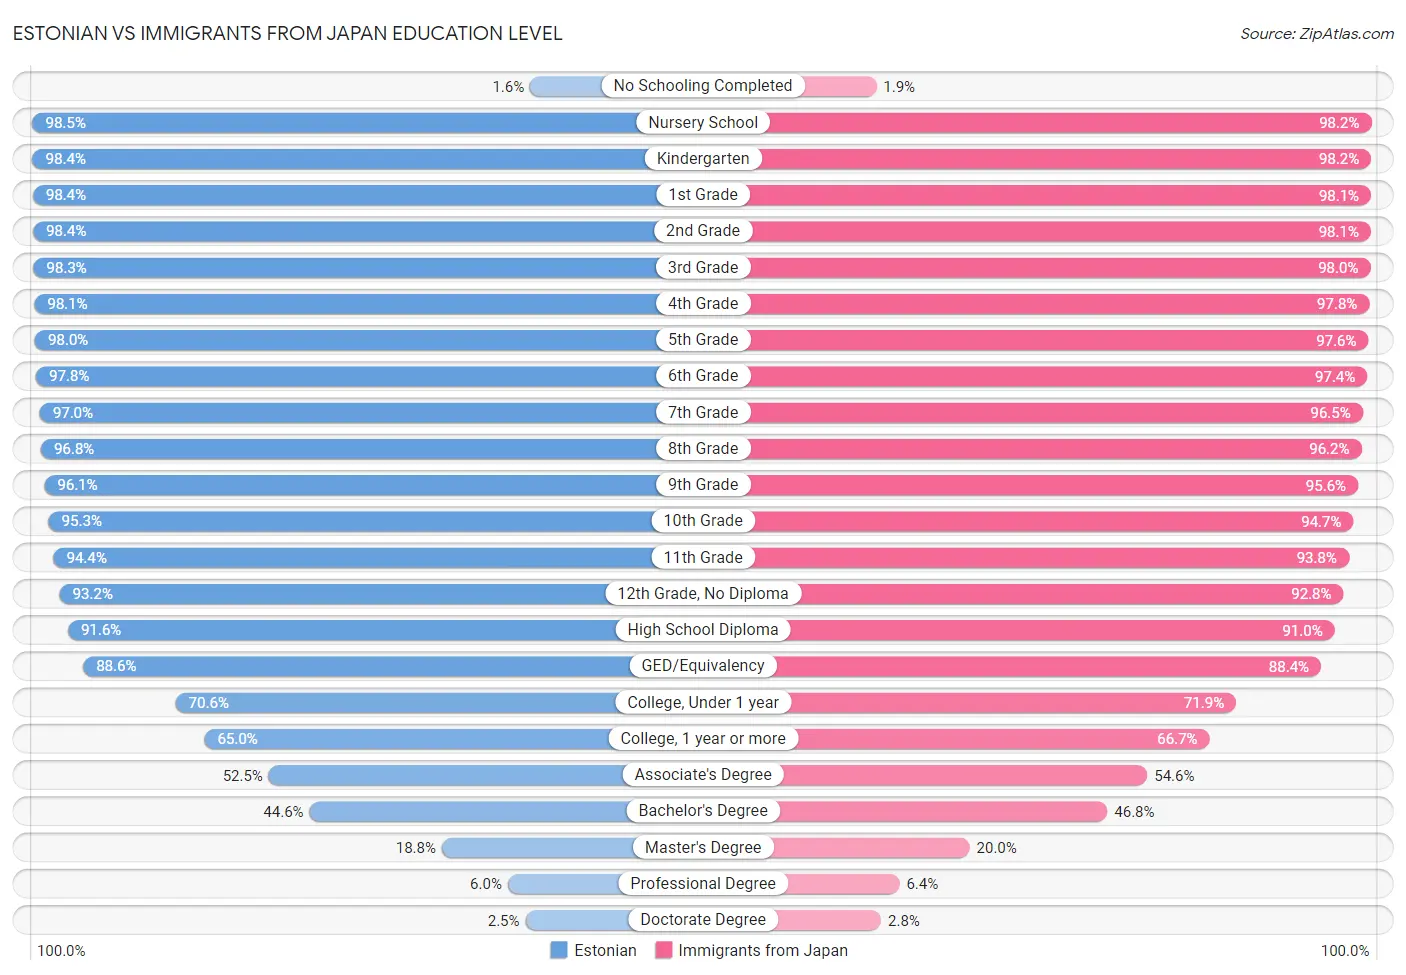 Estonian vs Immigrants from Japan Education Level